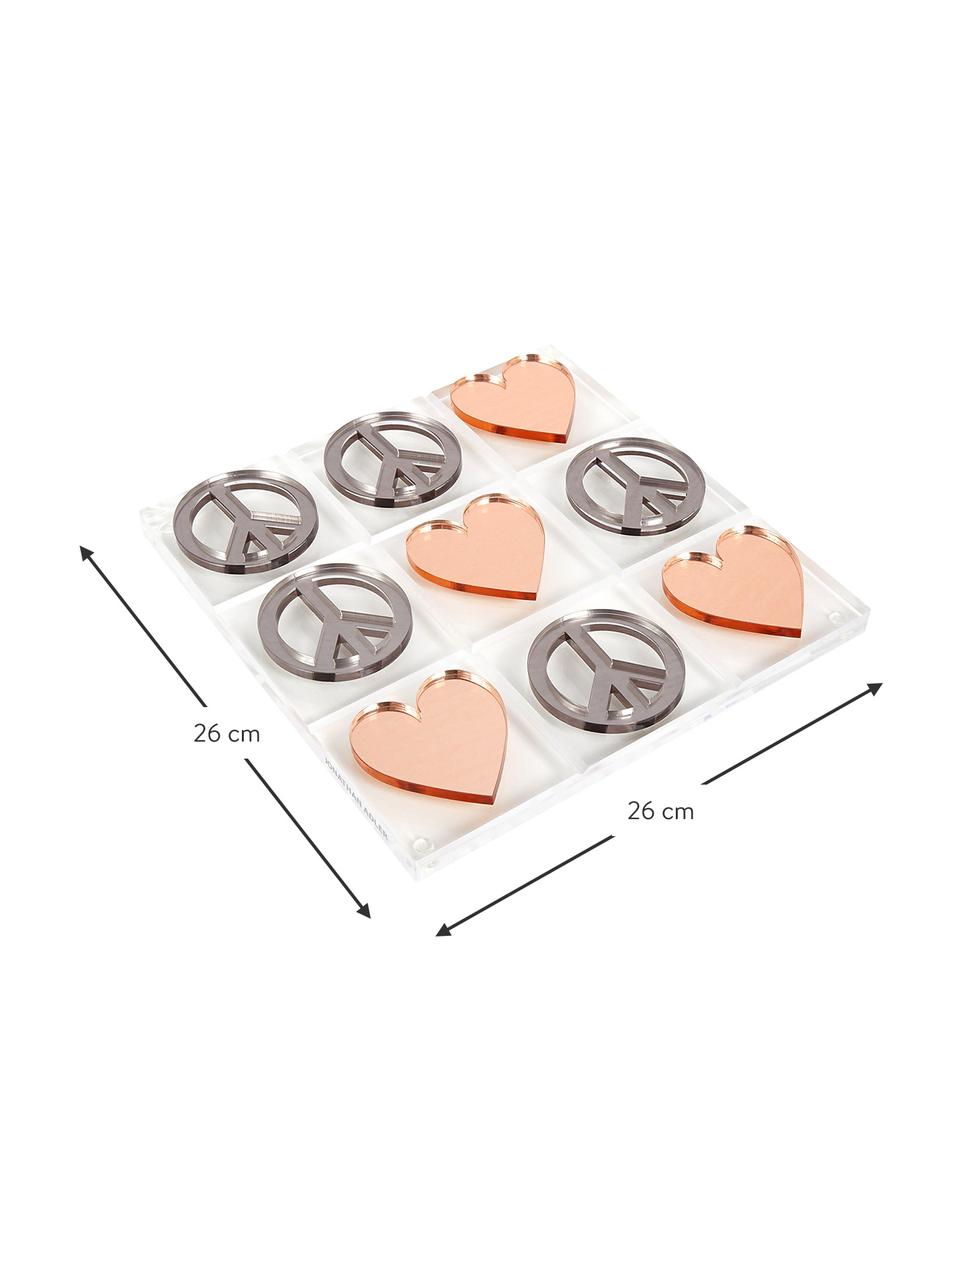 Bordspel Love & Peace Tic Tac Toe, 100% acrylglas, Speelstenen: zilverkleurig, koperkleurig. Speelbord: transparant, 26 x 26 cm